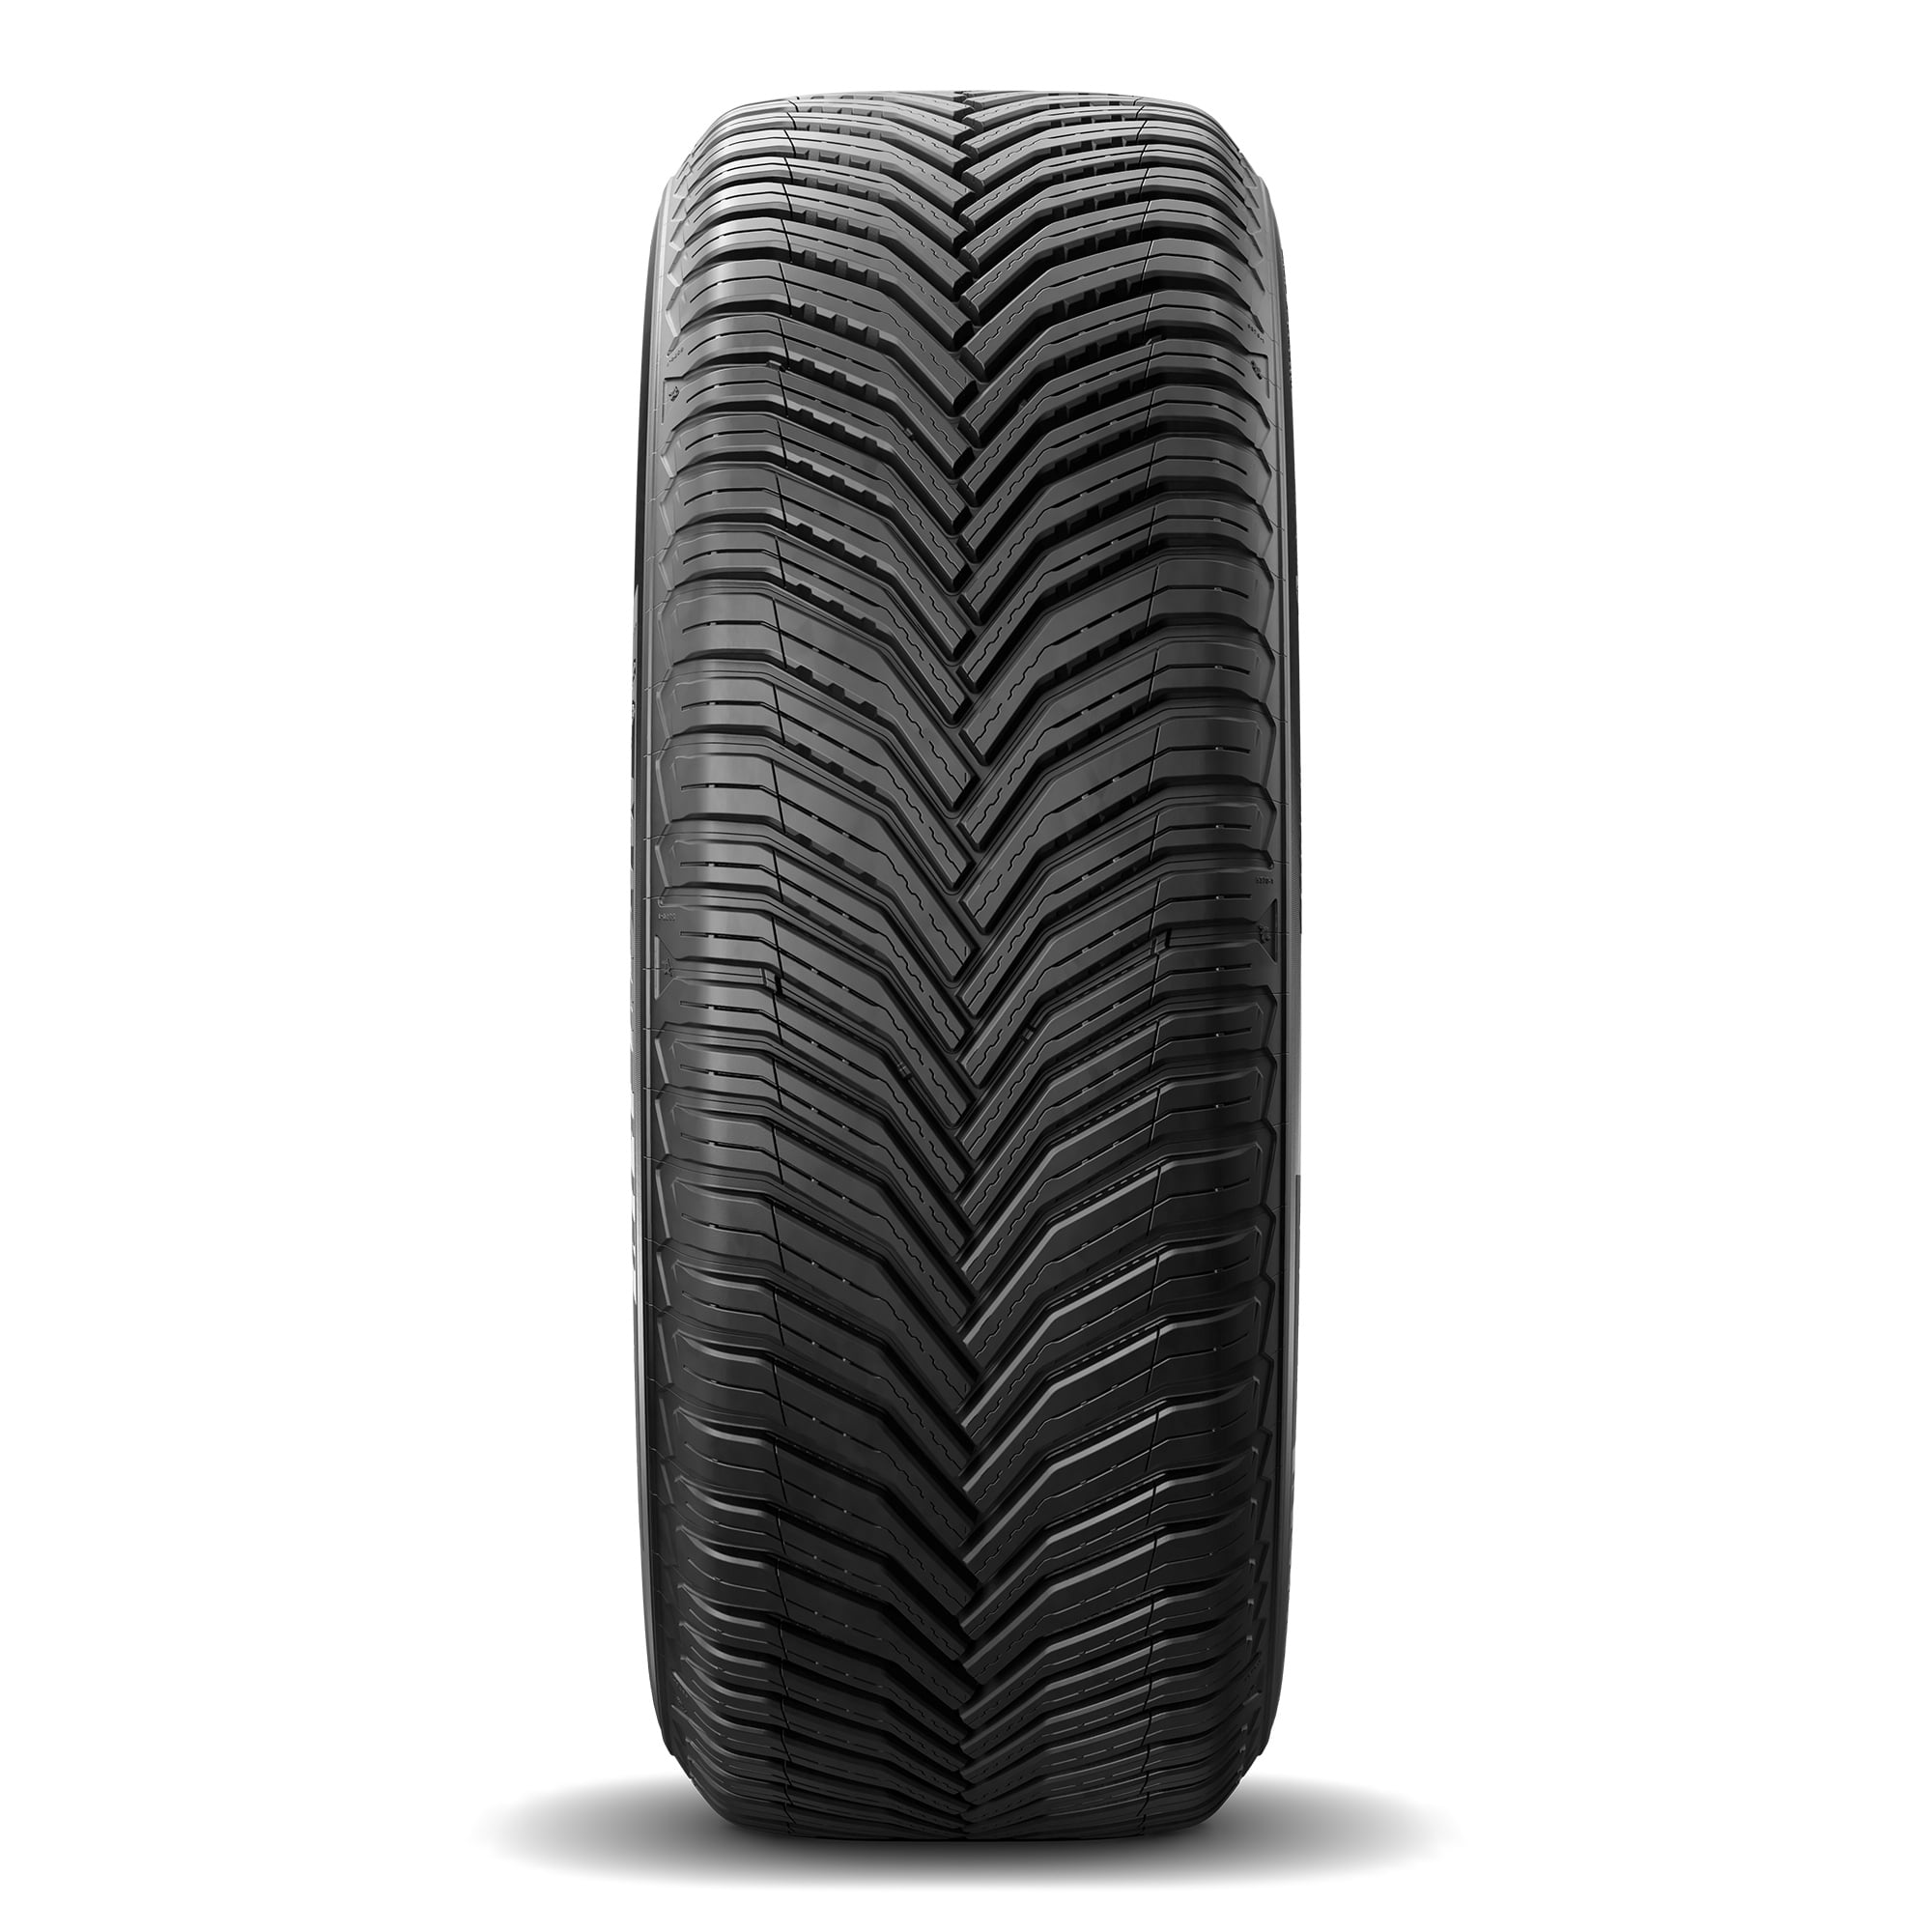 Metropolitan Say Saga Michelin CrossClimate2 All-Season 235/50R18 97V Tire - Walmart.com